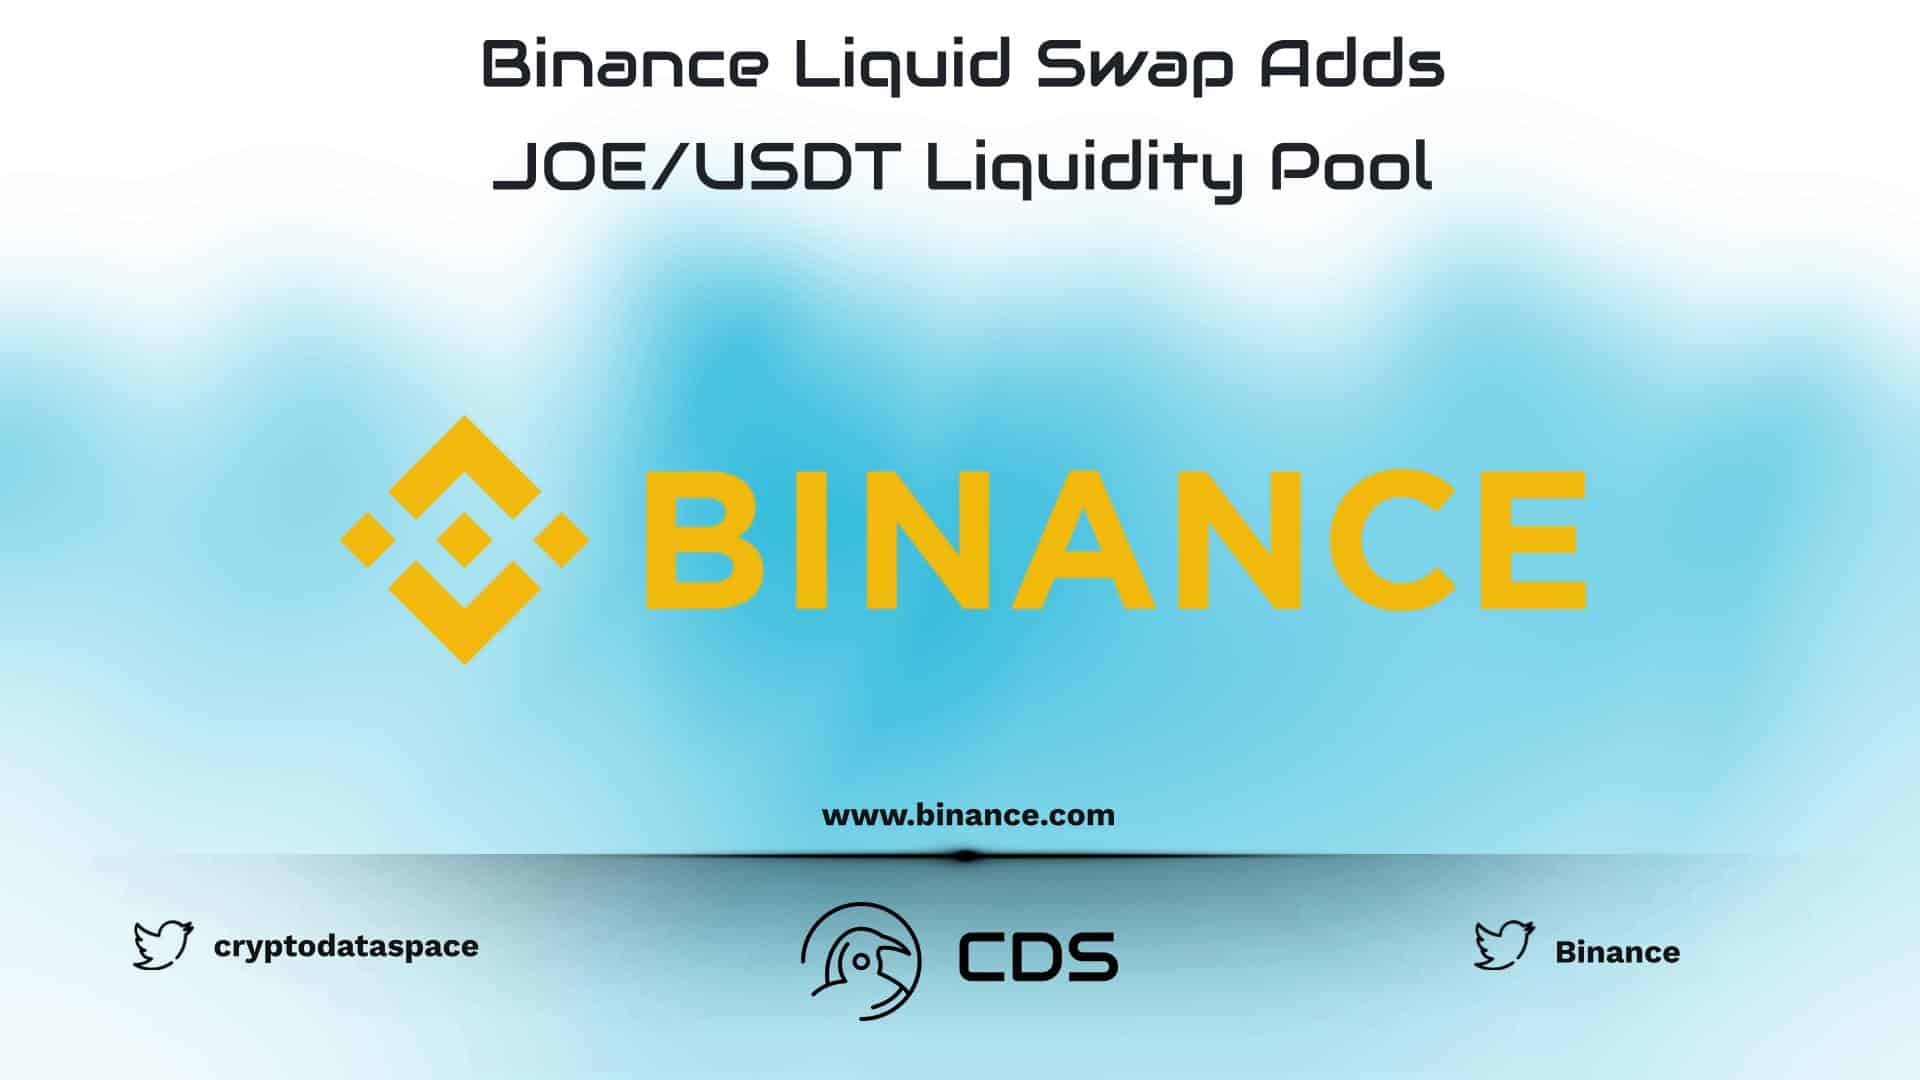 Binance Liquid Swap Adds JOE/USDT Liquidity Pool